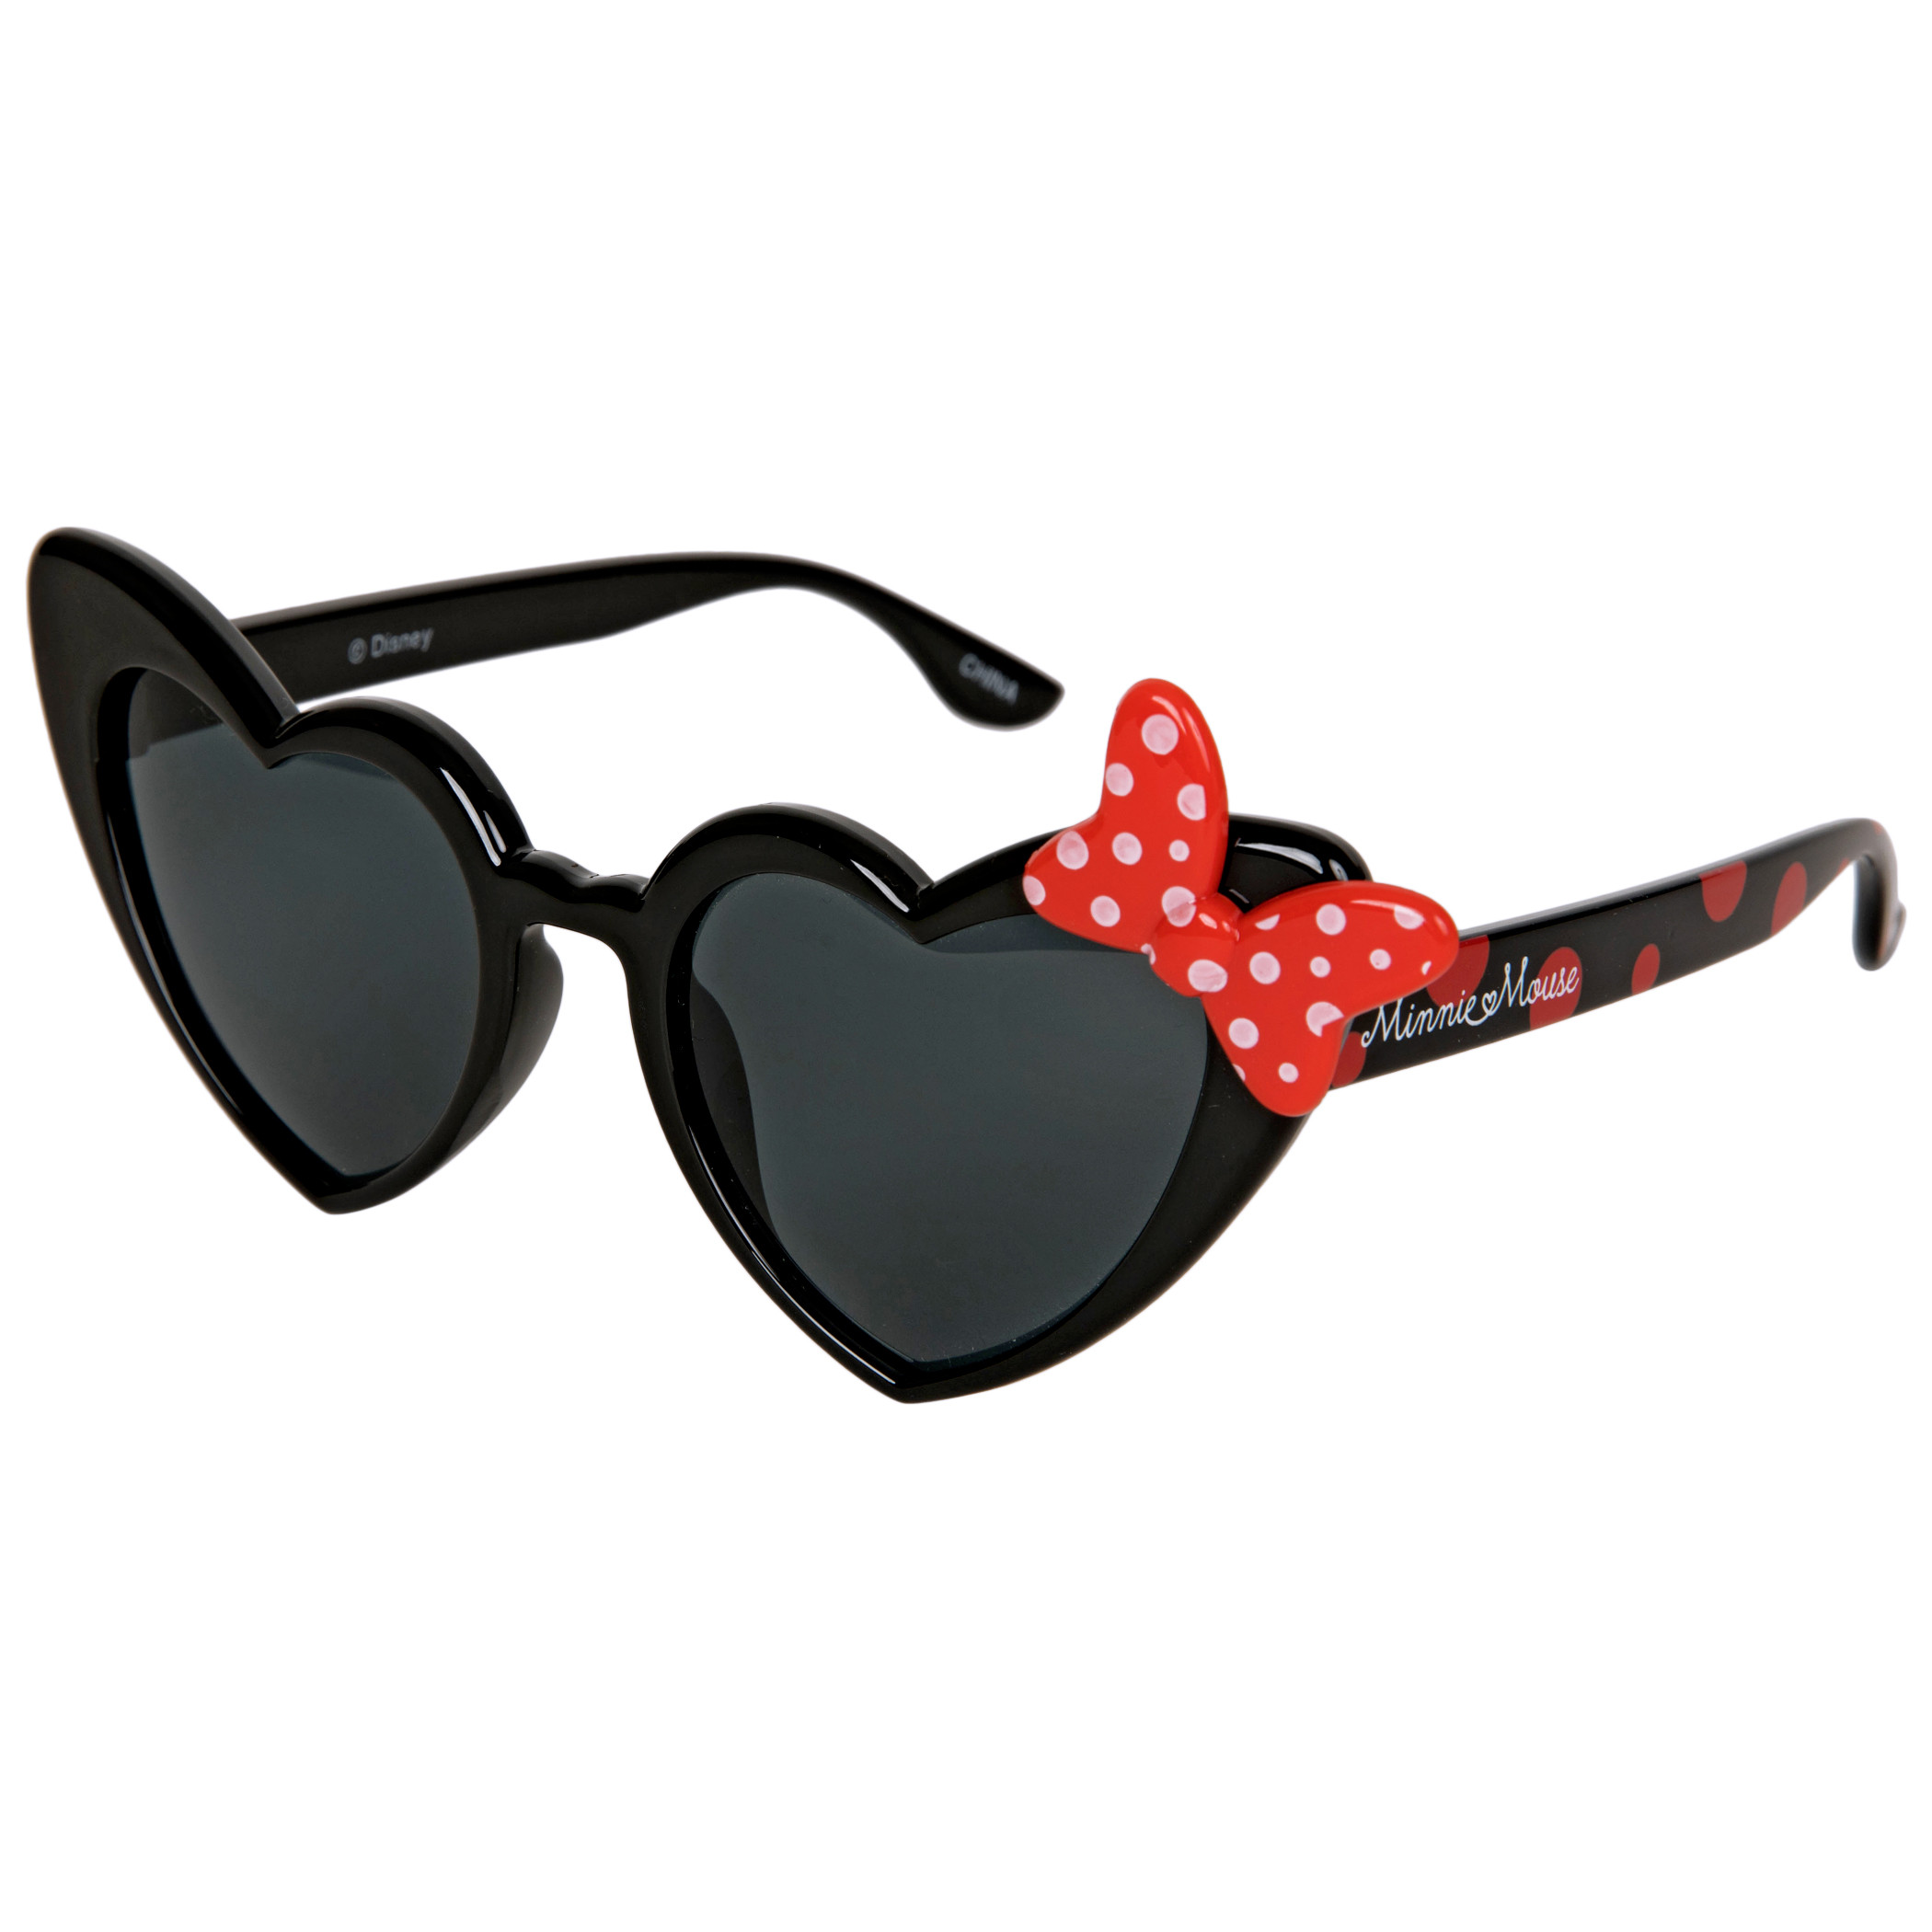 Stressvol afstand moeilijk tevreden te krijgen Disney Minnie Mouse Heart Shaped Polka Dot Print Sunglasses with Bow